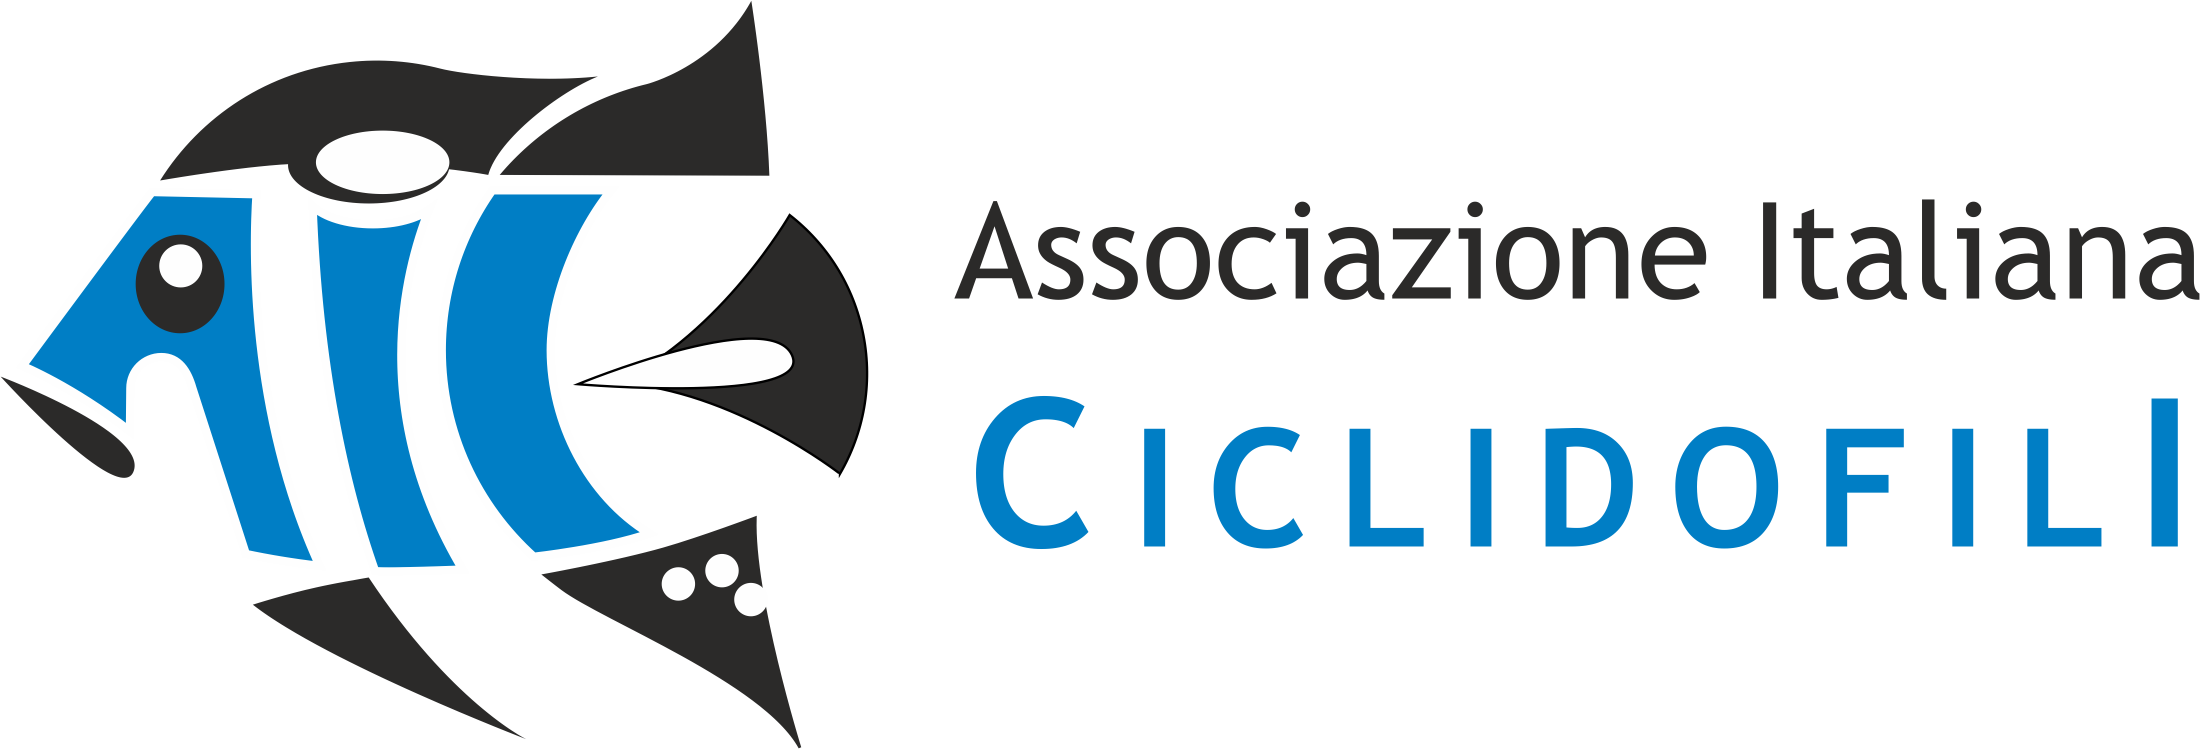 nuovo logo AIC